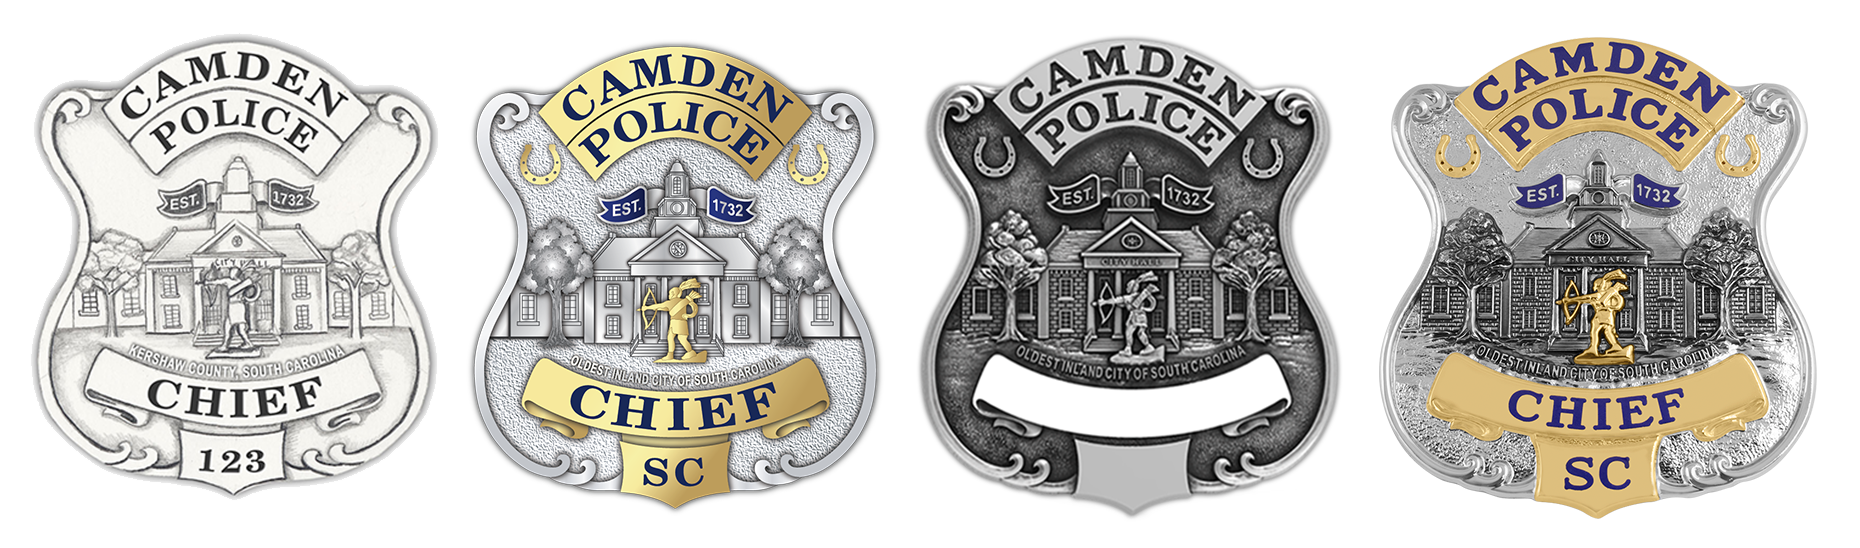 Camden Police Badge Design